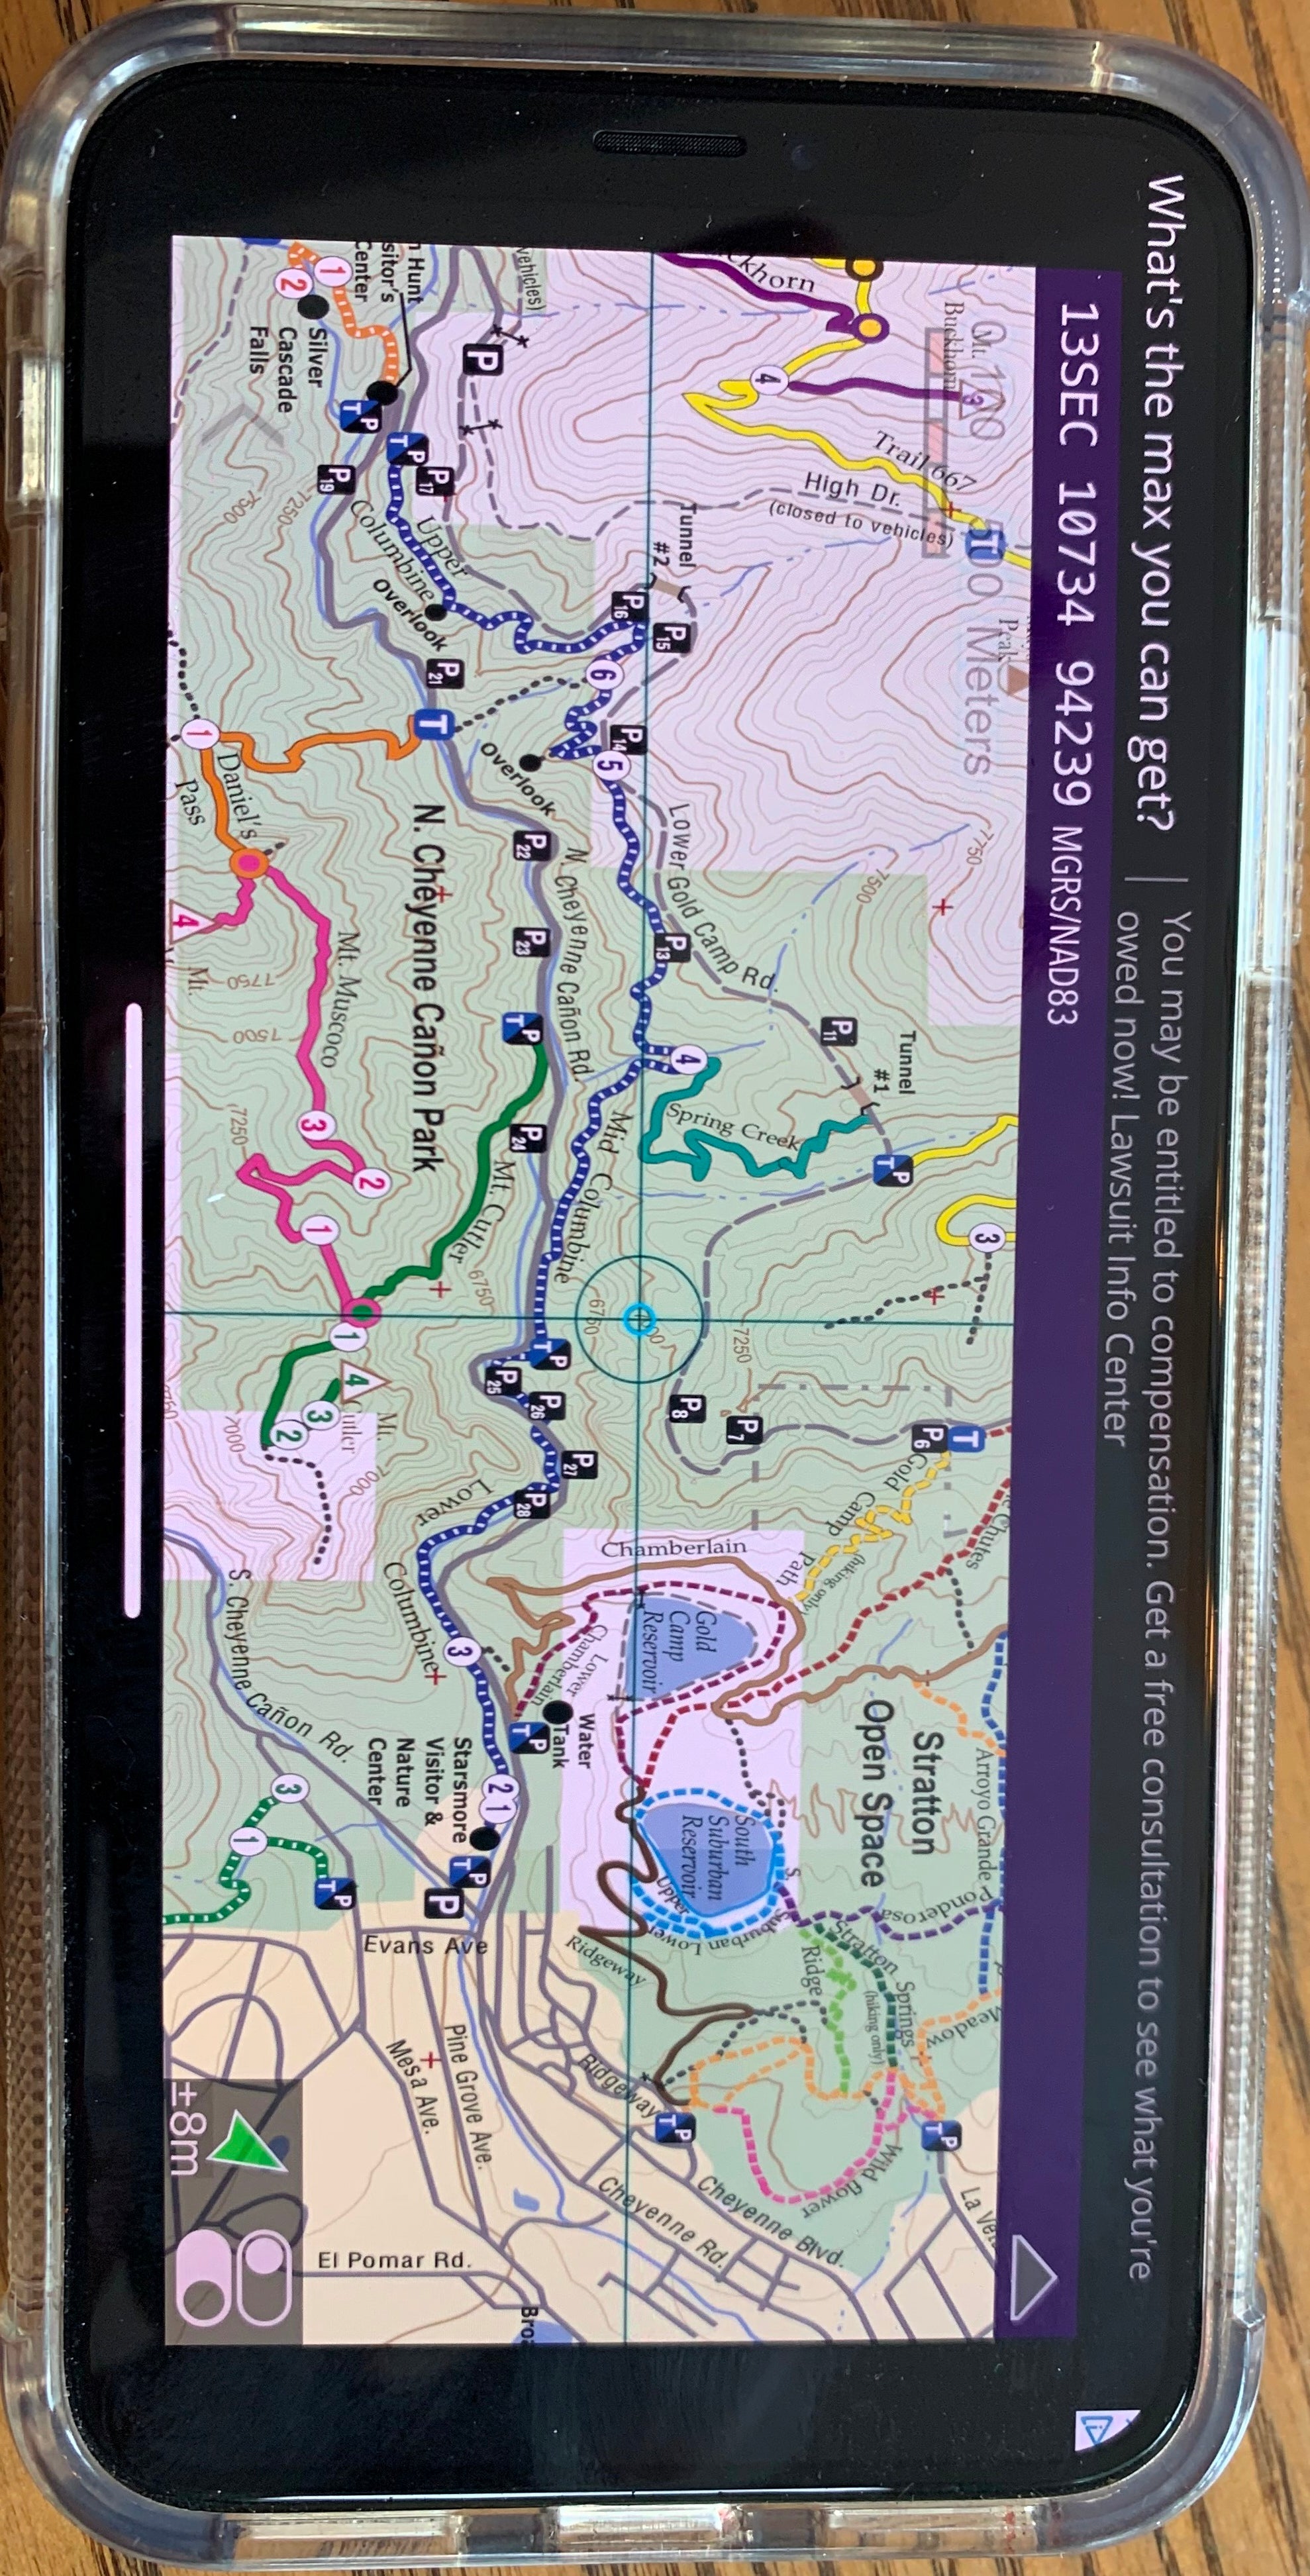 Pocket Pals Trail Maps - Digital GeoPDF Colorado Trail and Recreation Maps